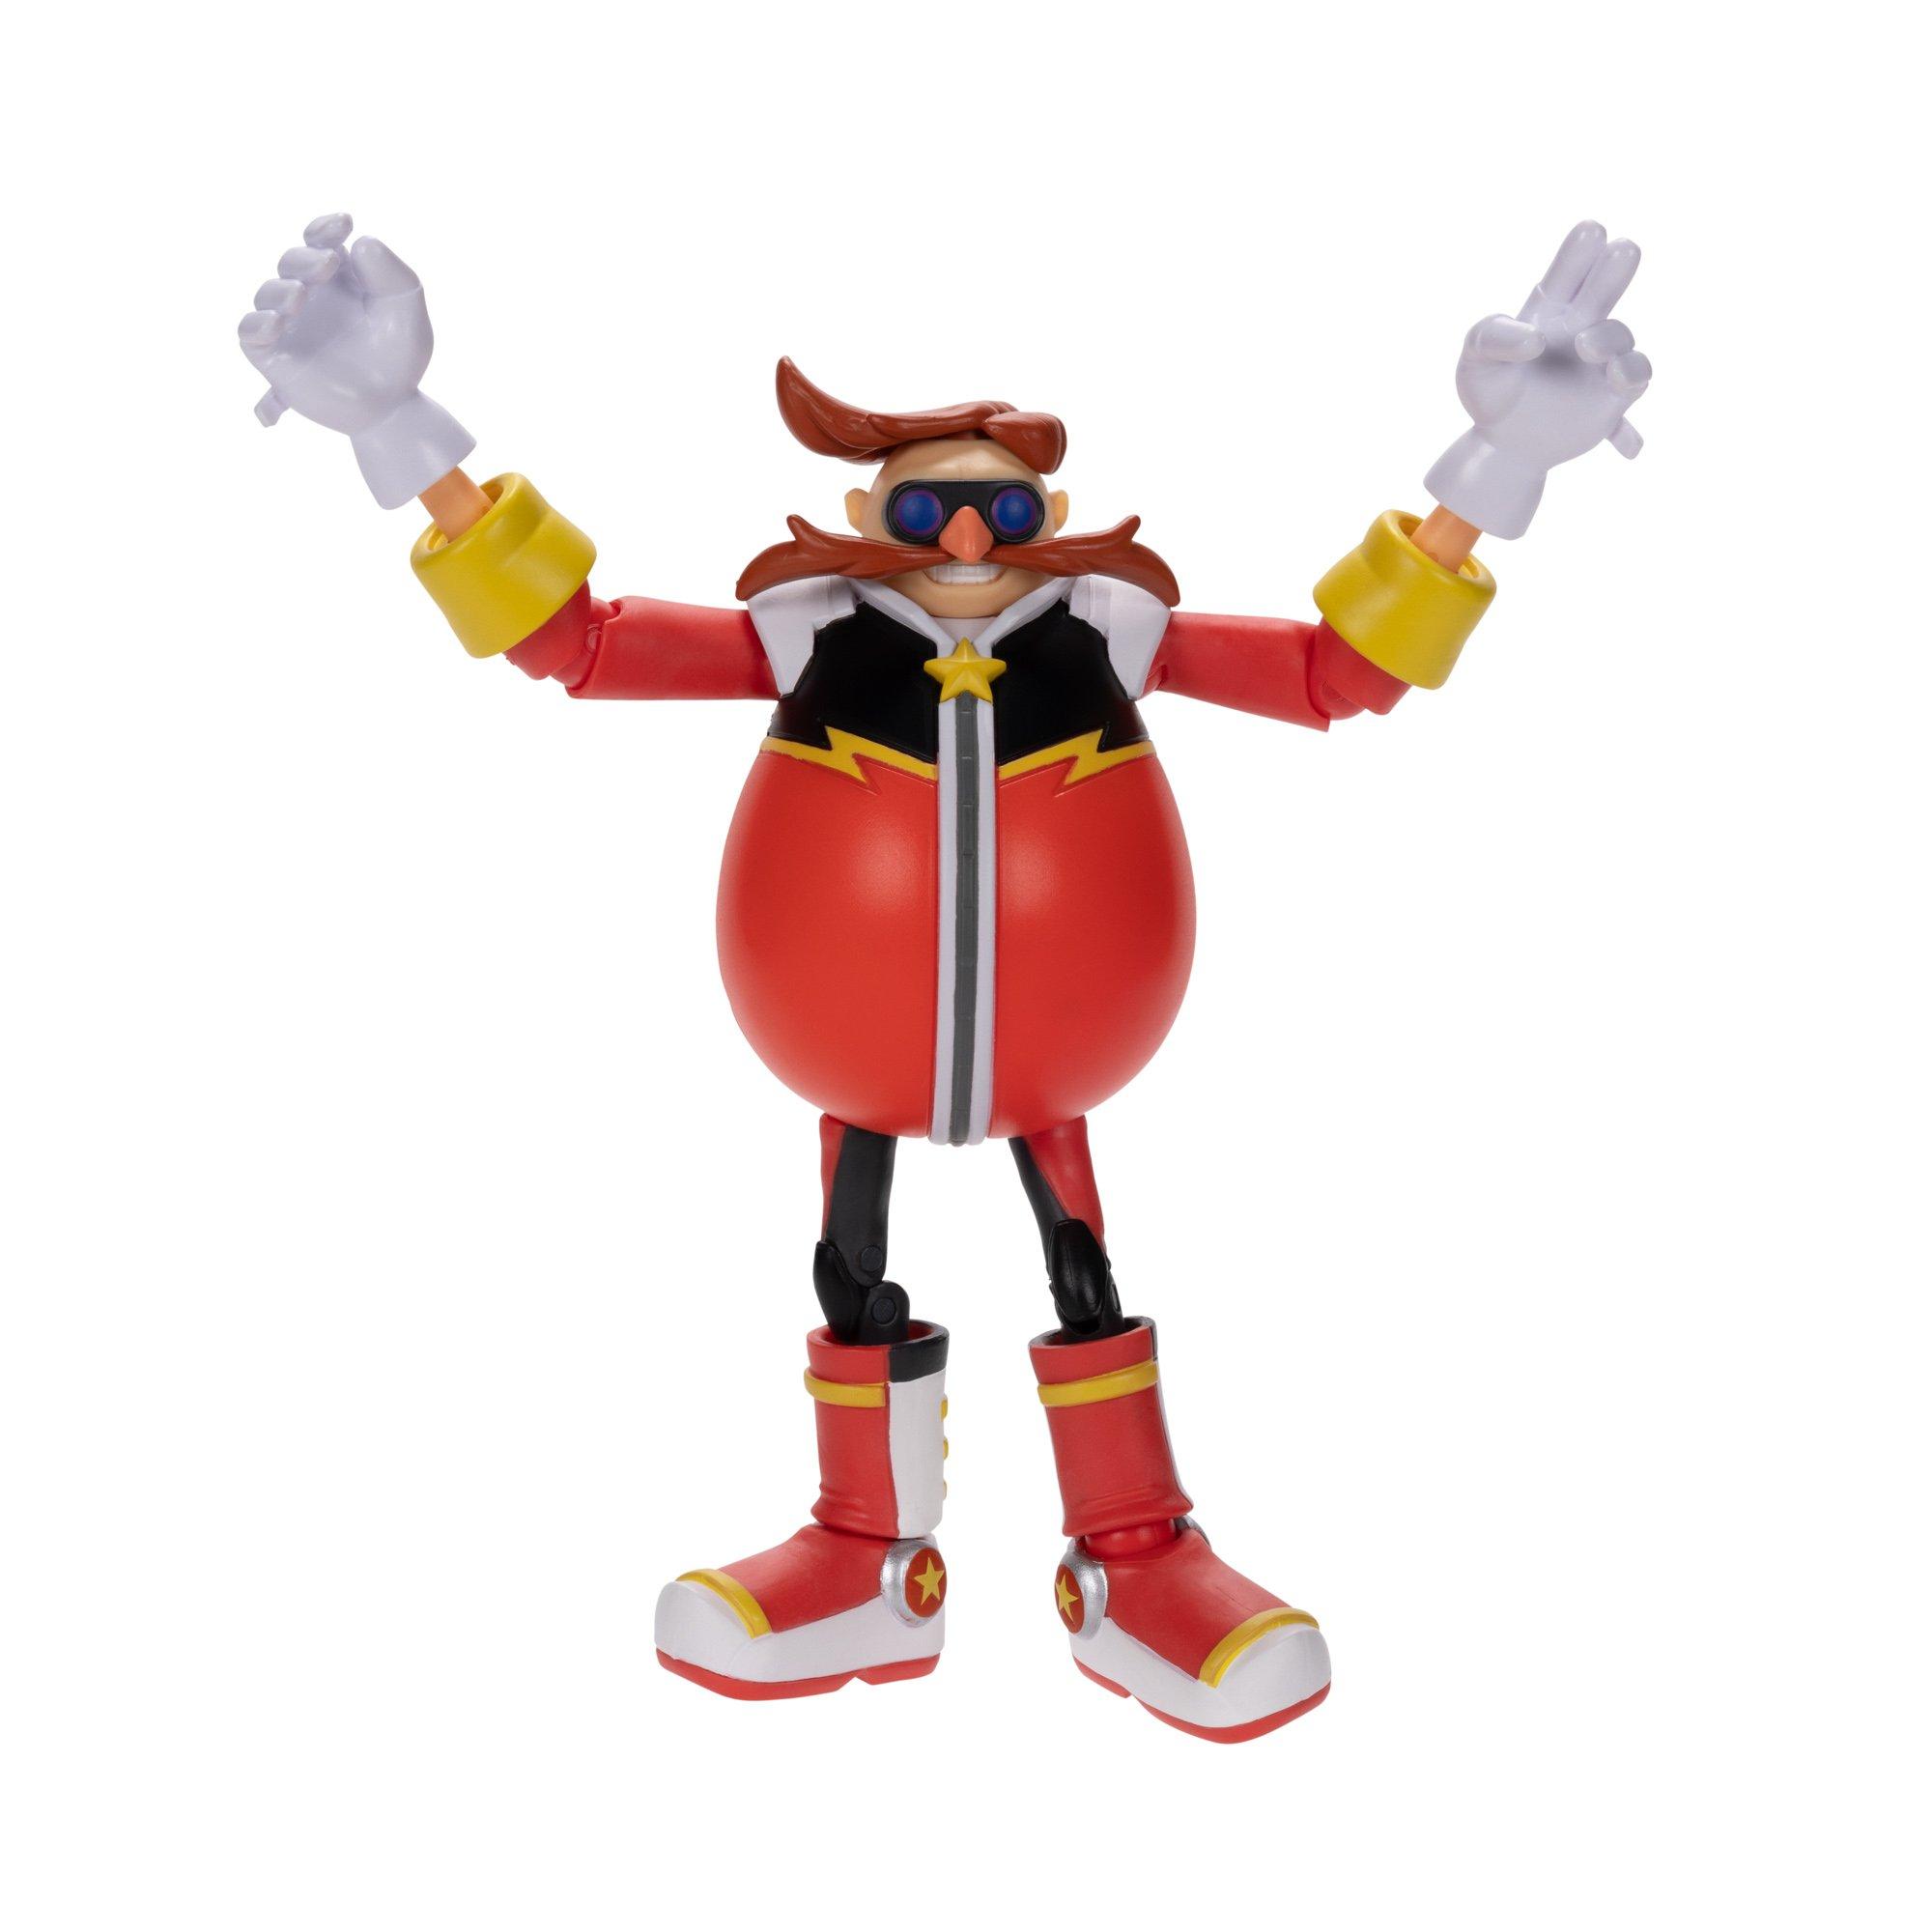 (Provisional Pre-Order) Jakks Netflix Sonic Prime 5 In Figure Tails Nine  Mr. Dr. Eggman New Yoke City BUNDLE/LOT